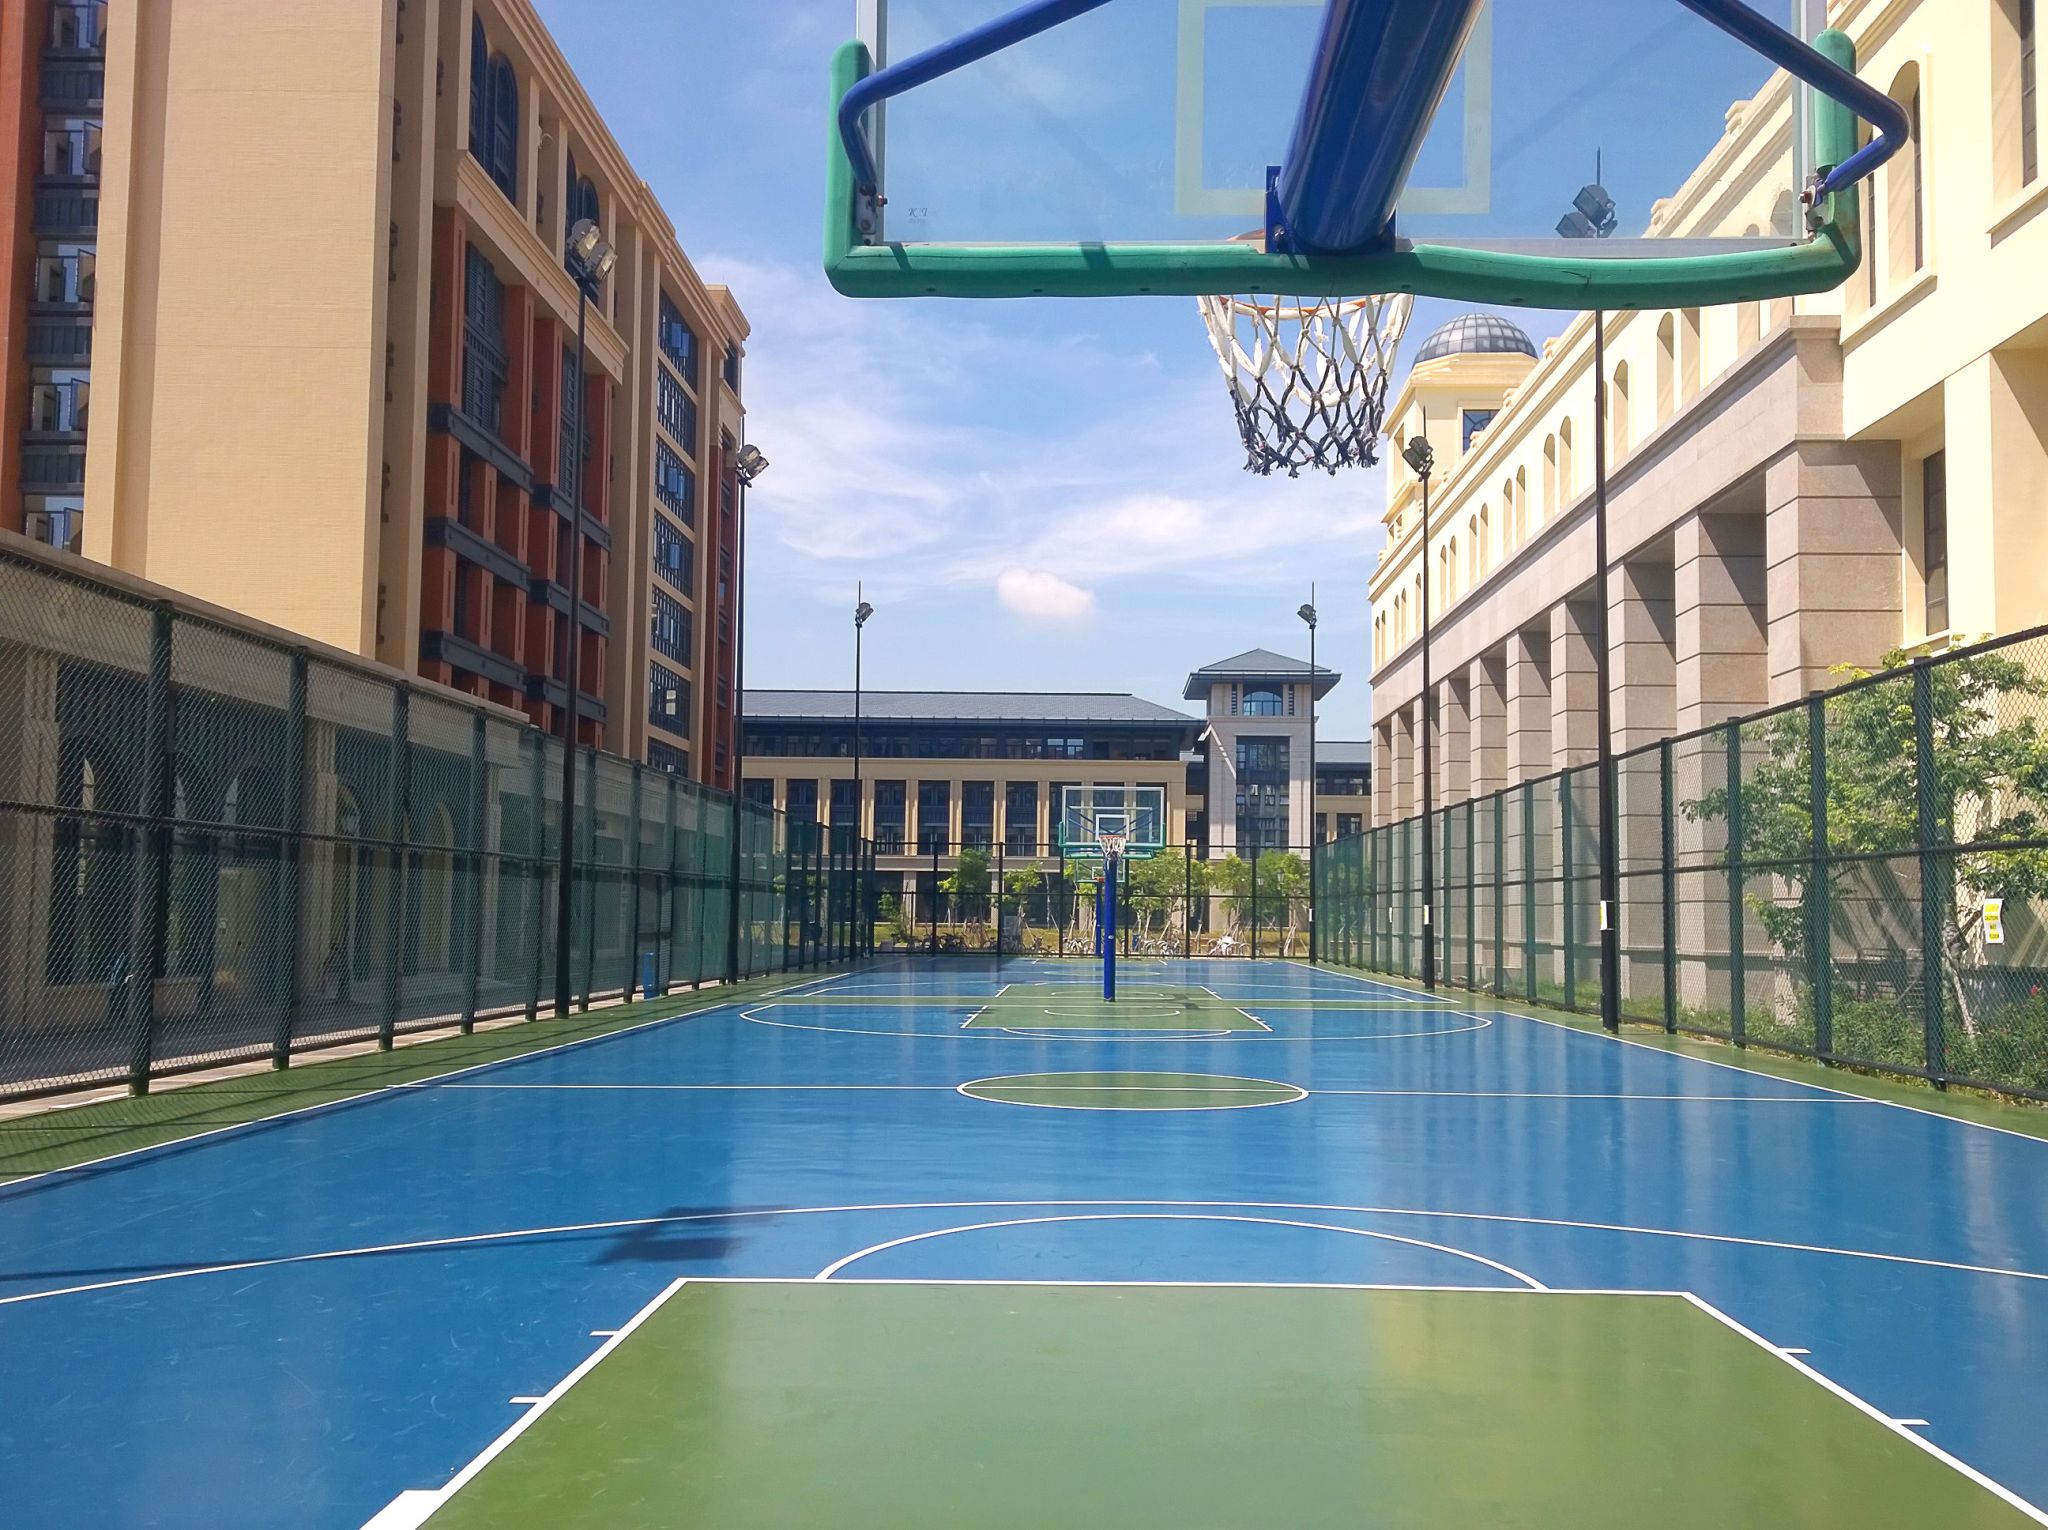 Basketball Courts - UM OSA Sports Facilities 澳門大學體育事務部 體育設施